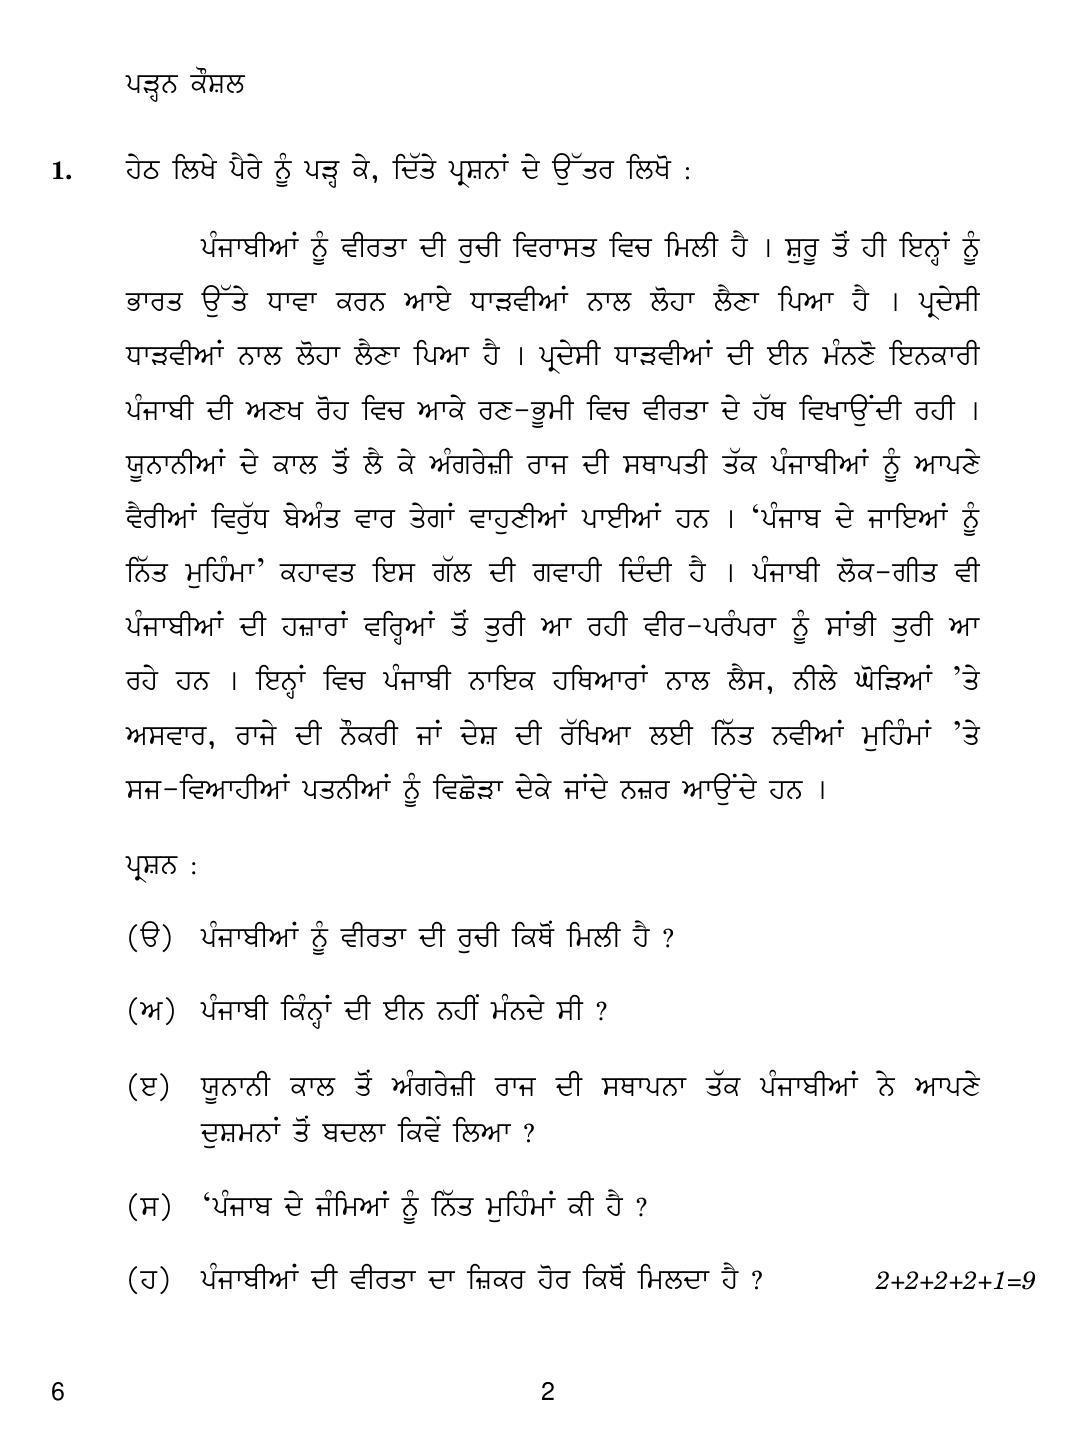 CBSE Class 10 6 Punjabi 2019 Compartment Question Paper - Page 2